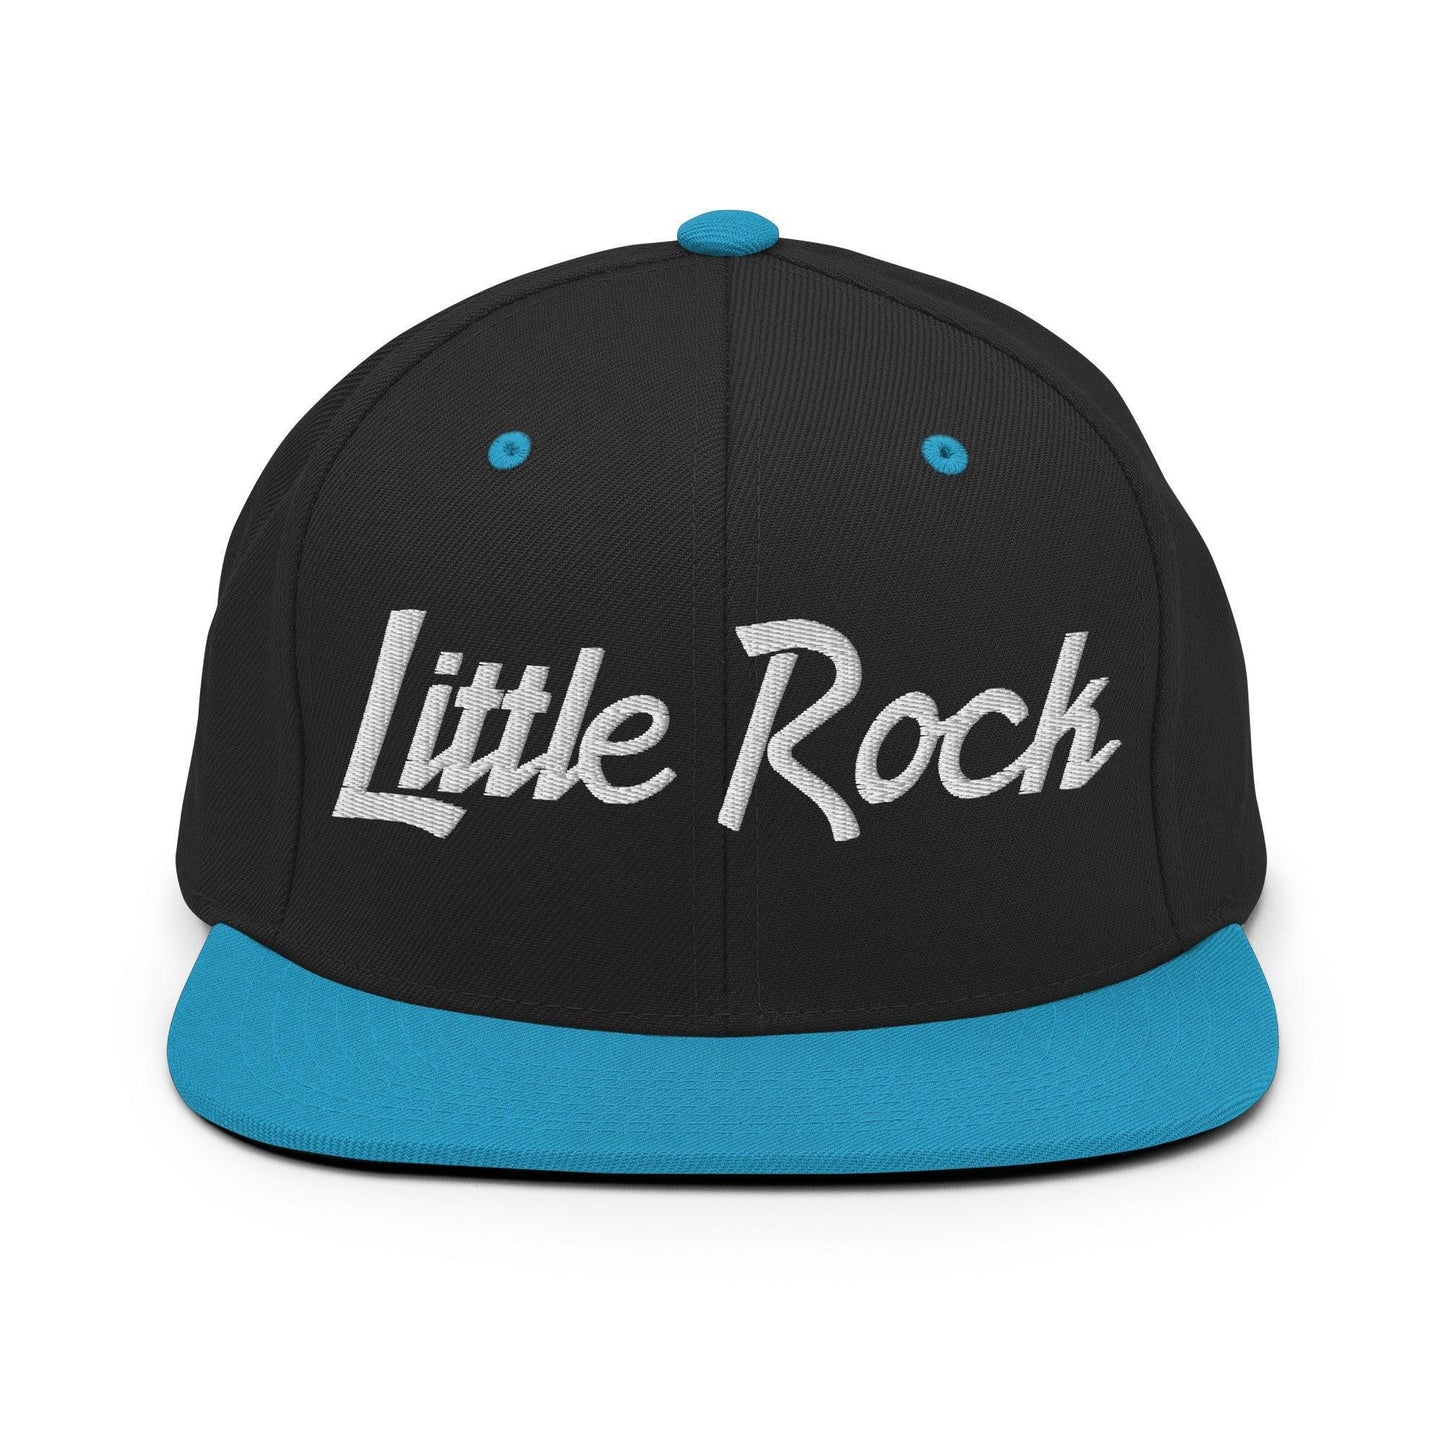 Little Rock Script Snapback Hat Black Teal